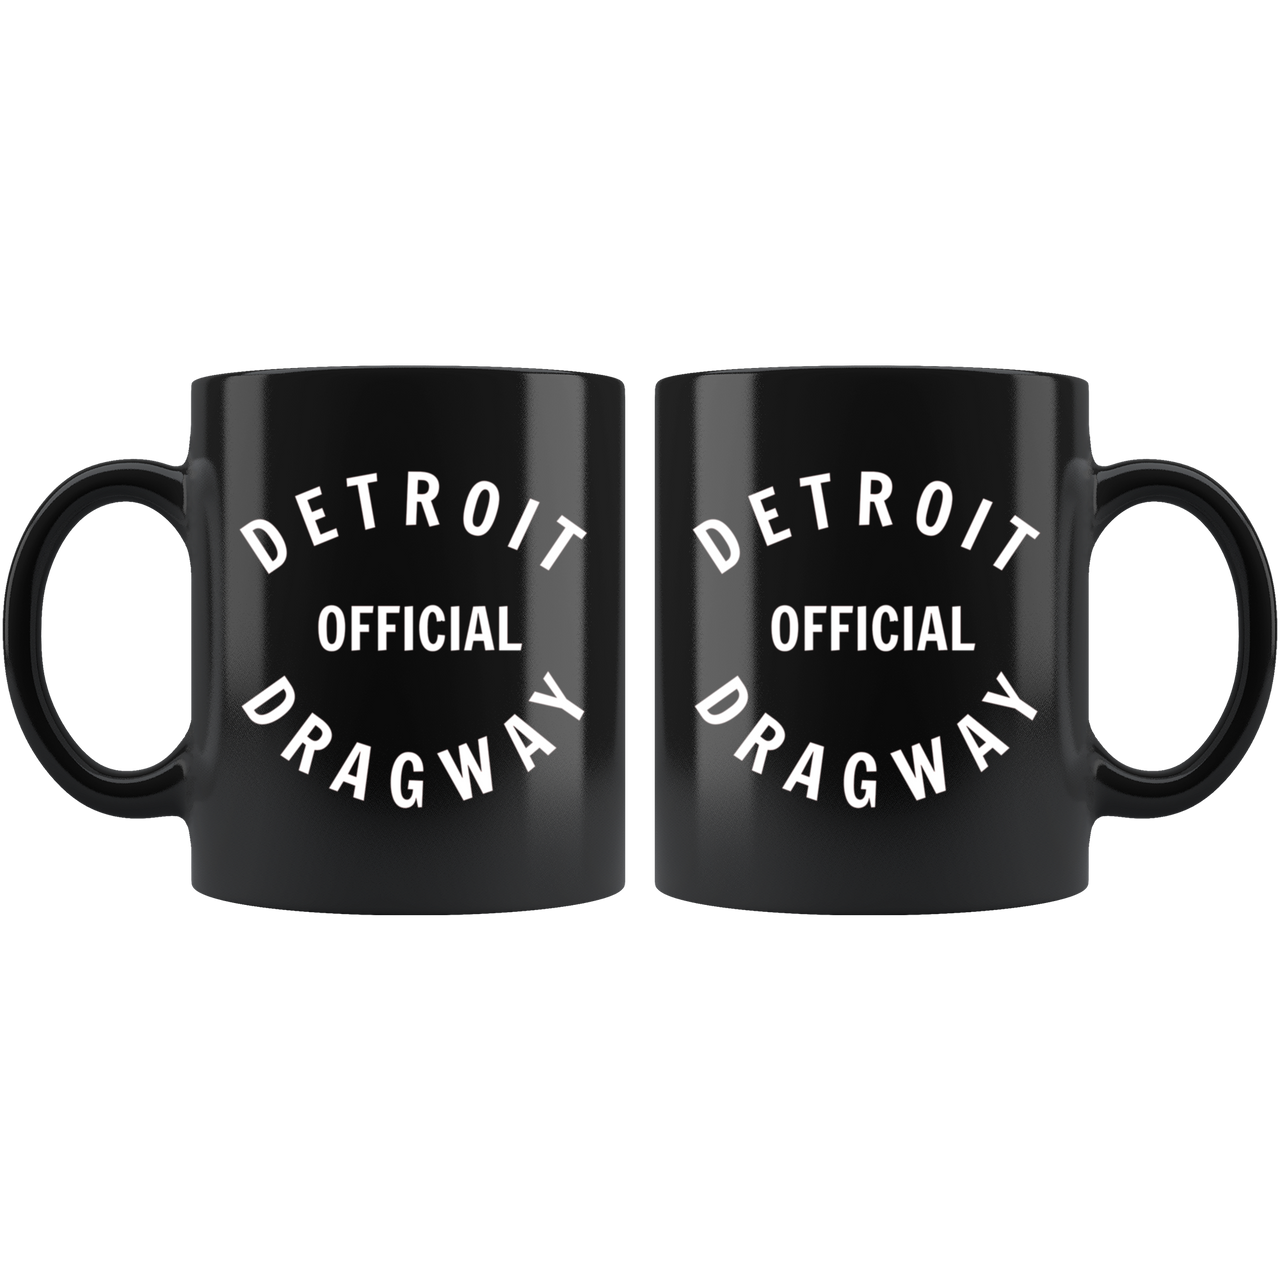 Detroit Dragway® Official Black Mug